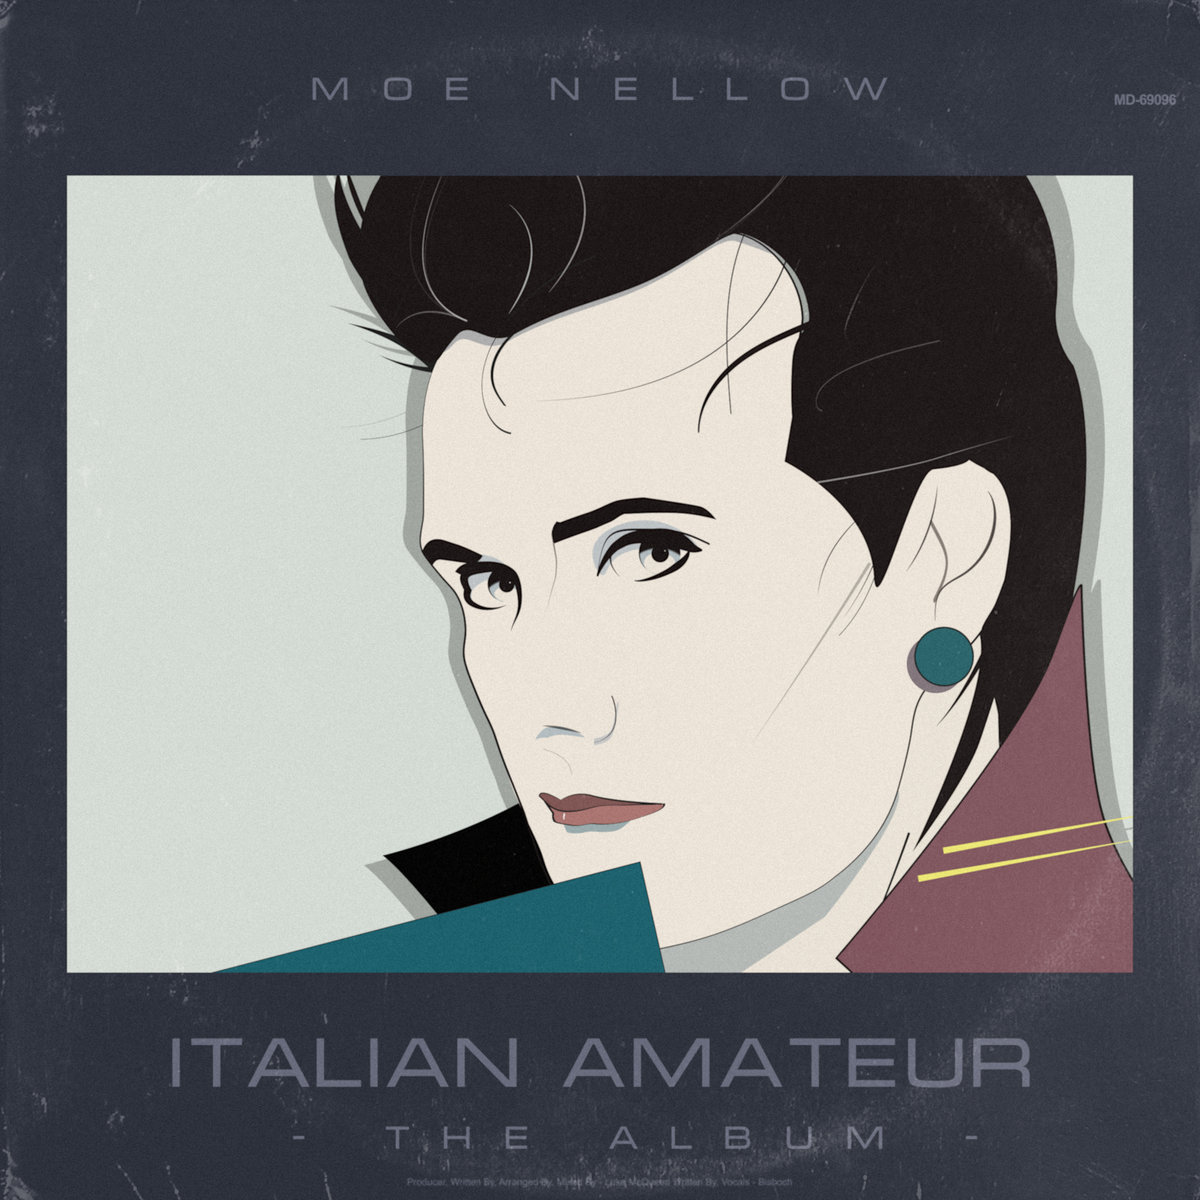 Moe Nellow - Italian Amateur